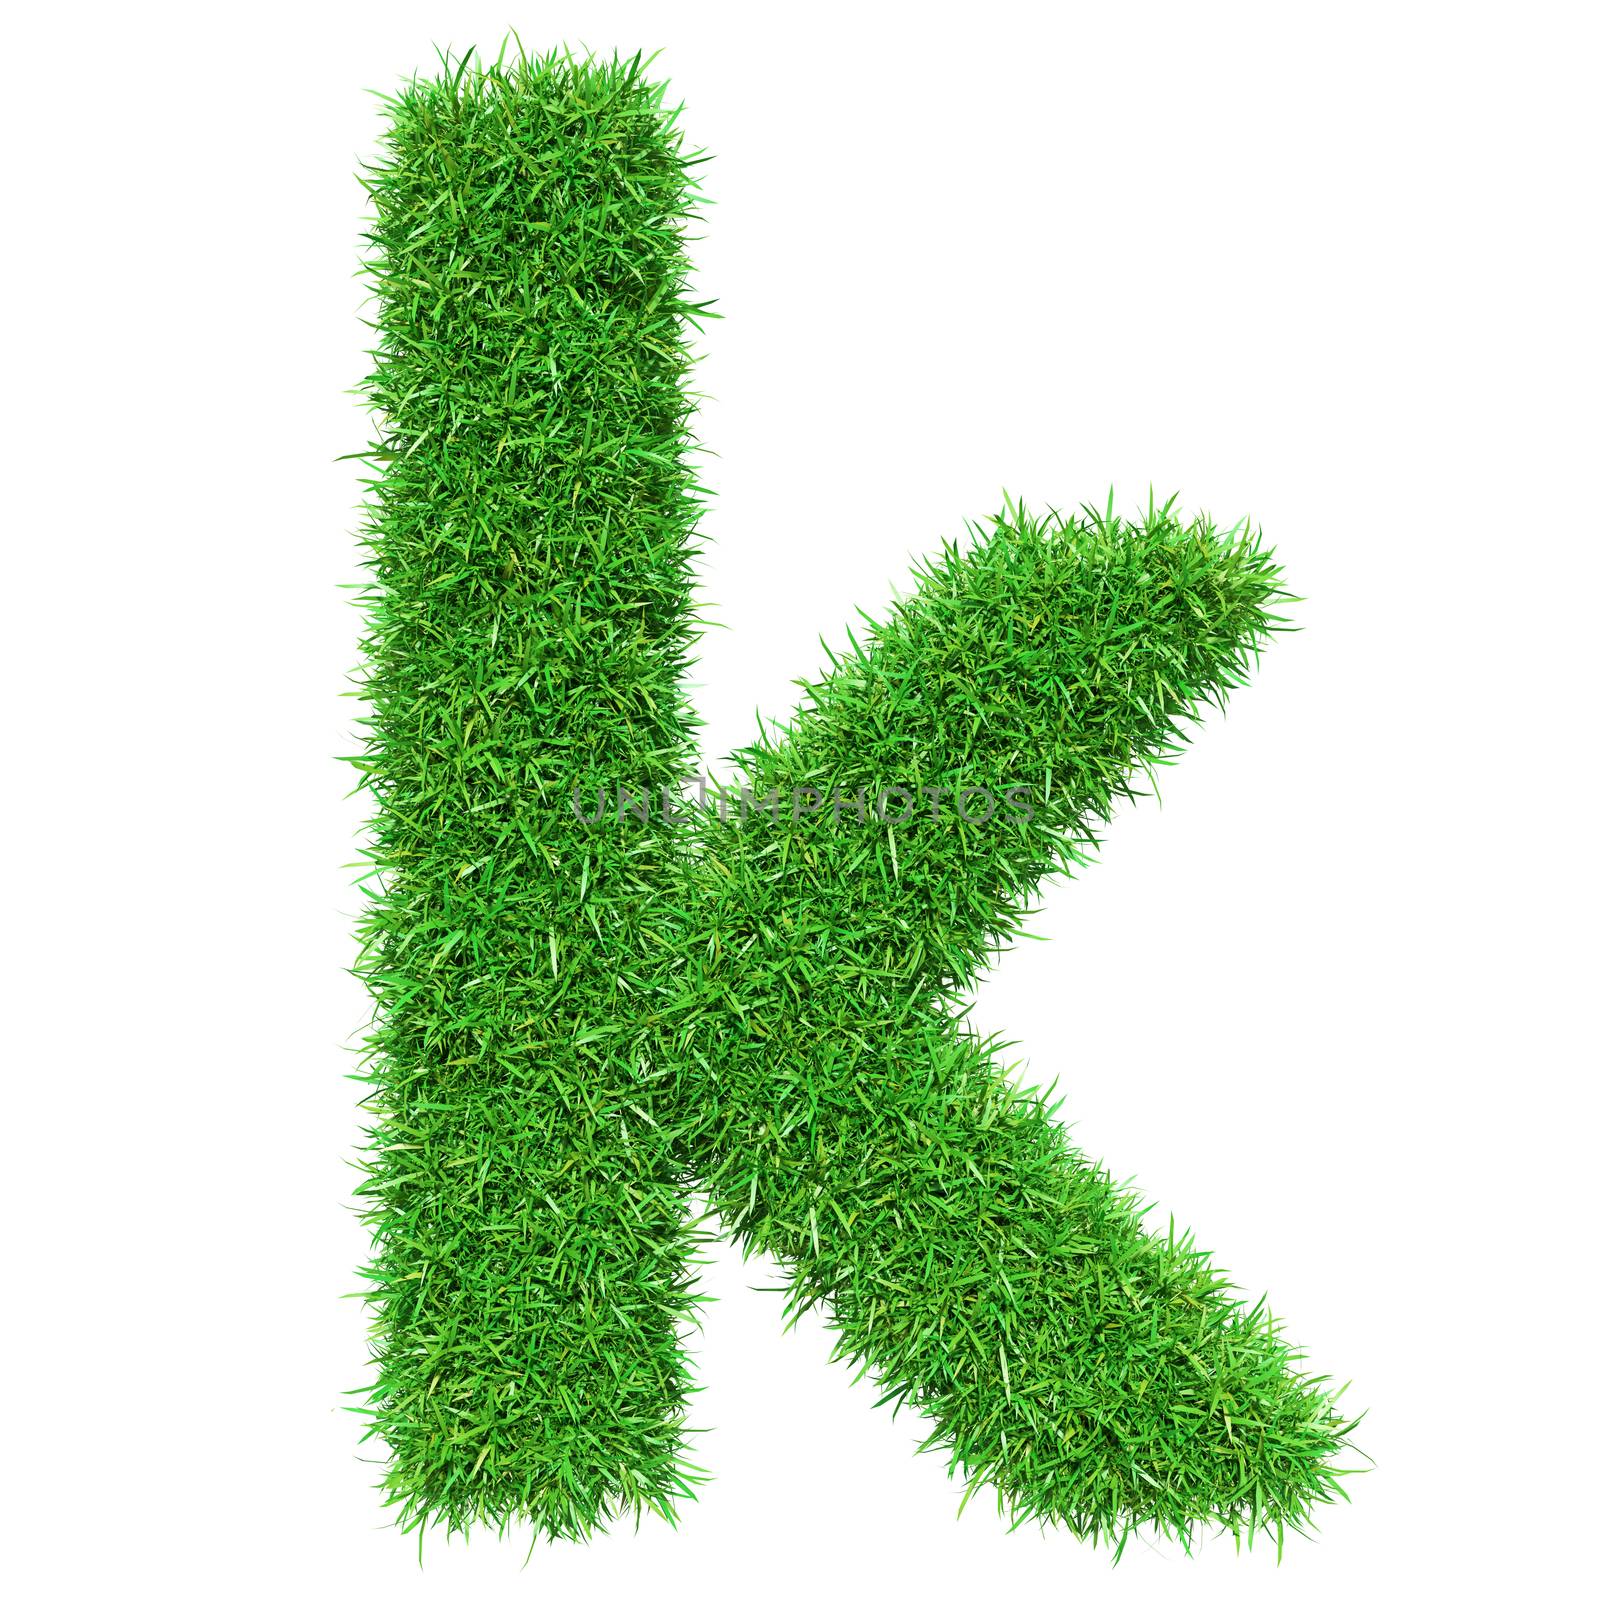 Green Grass Letter K by cherezoff